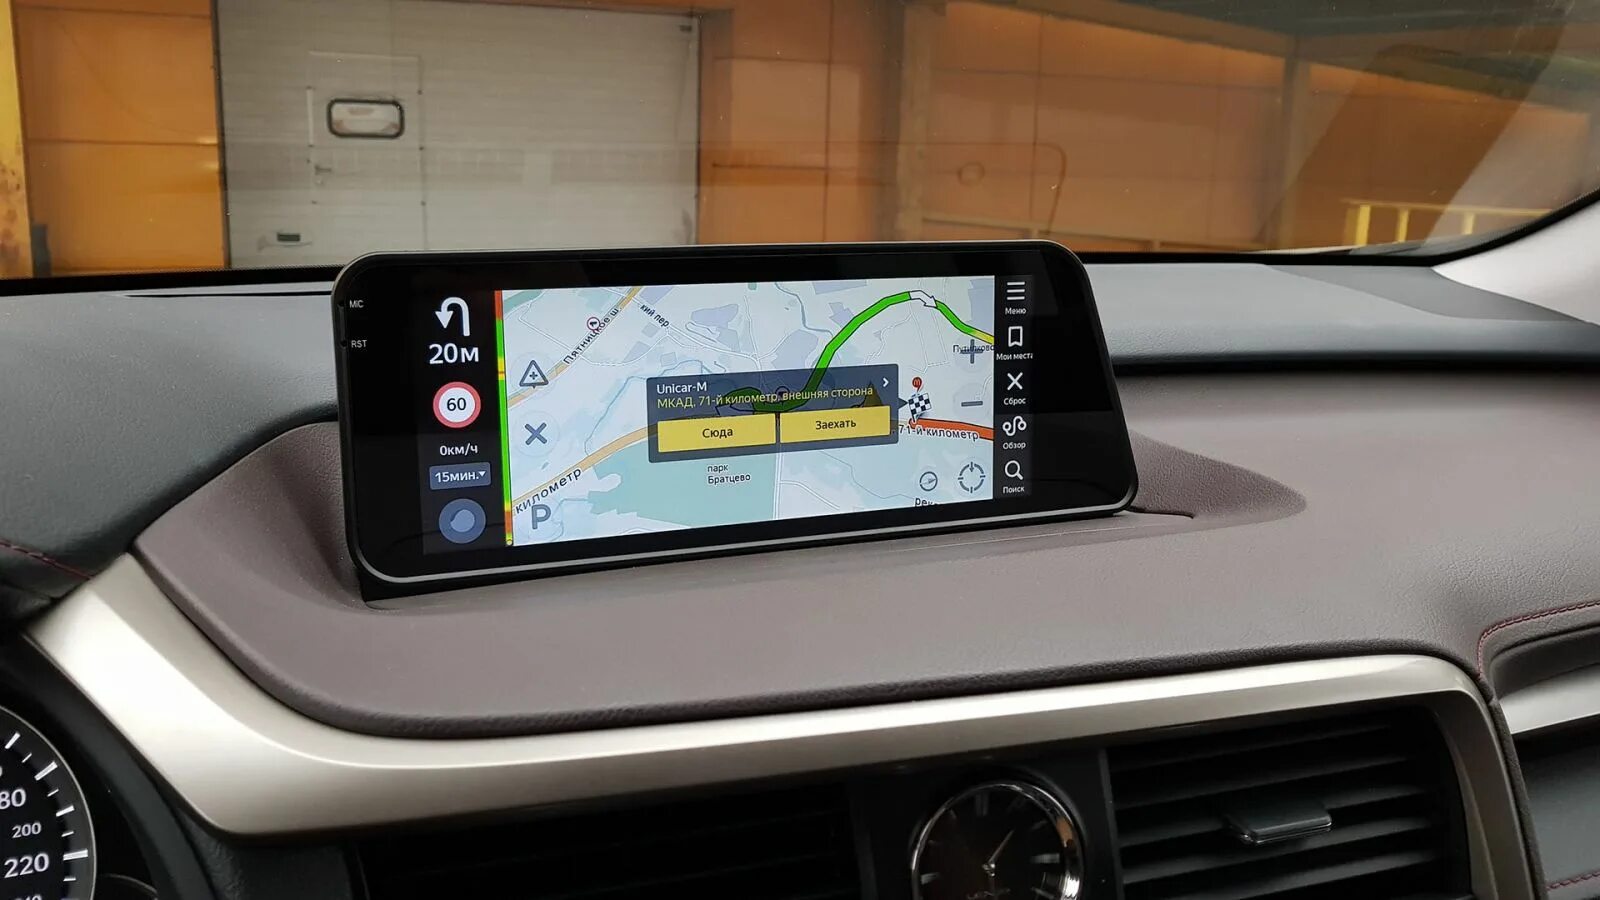 Андроид на торпеду. Автопланшет андроид на Торпедо. Регистратор на торпеду автомобиля на андроиде. Универсальный монитор андроид для автомобиля. Универсальный дисплей андроид на Торпедо автомобиля.